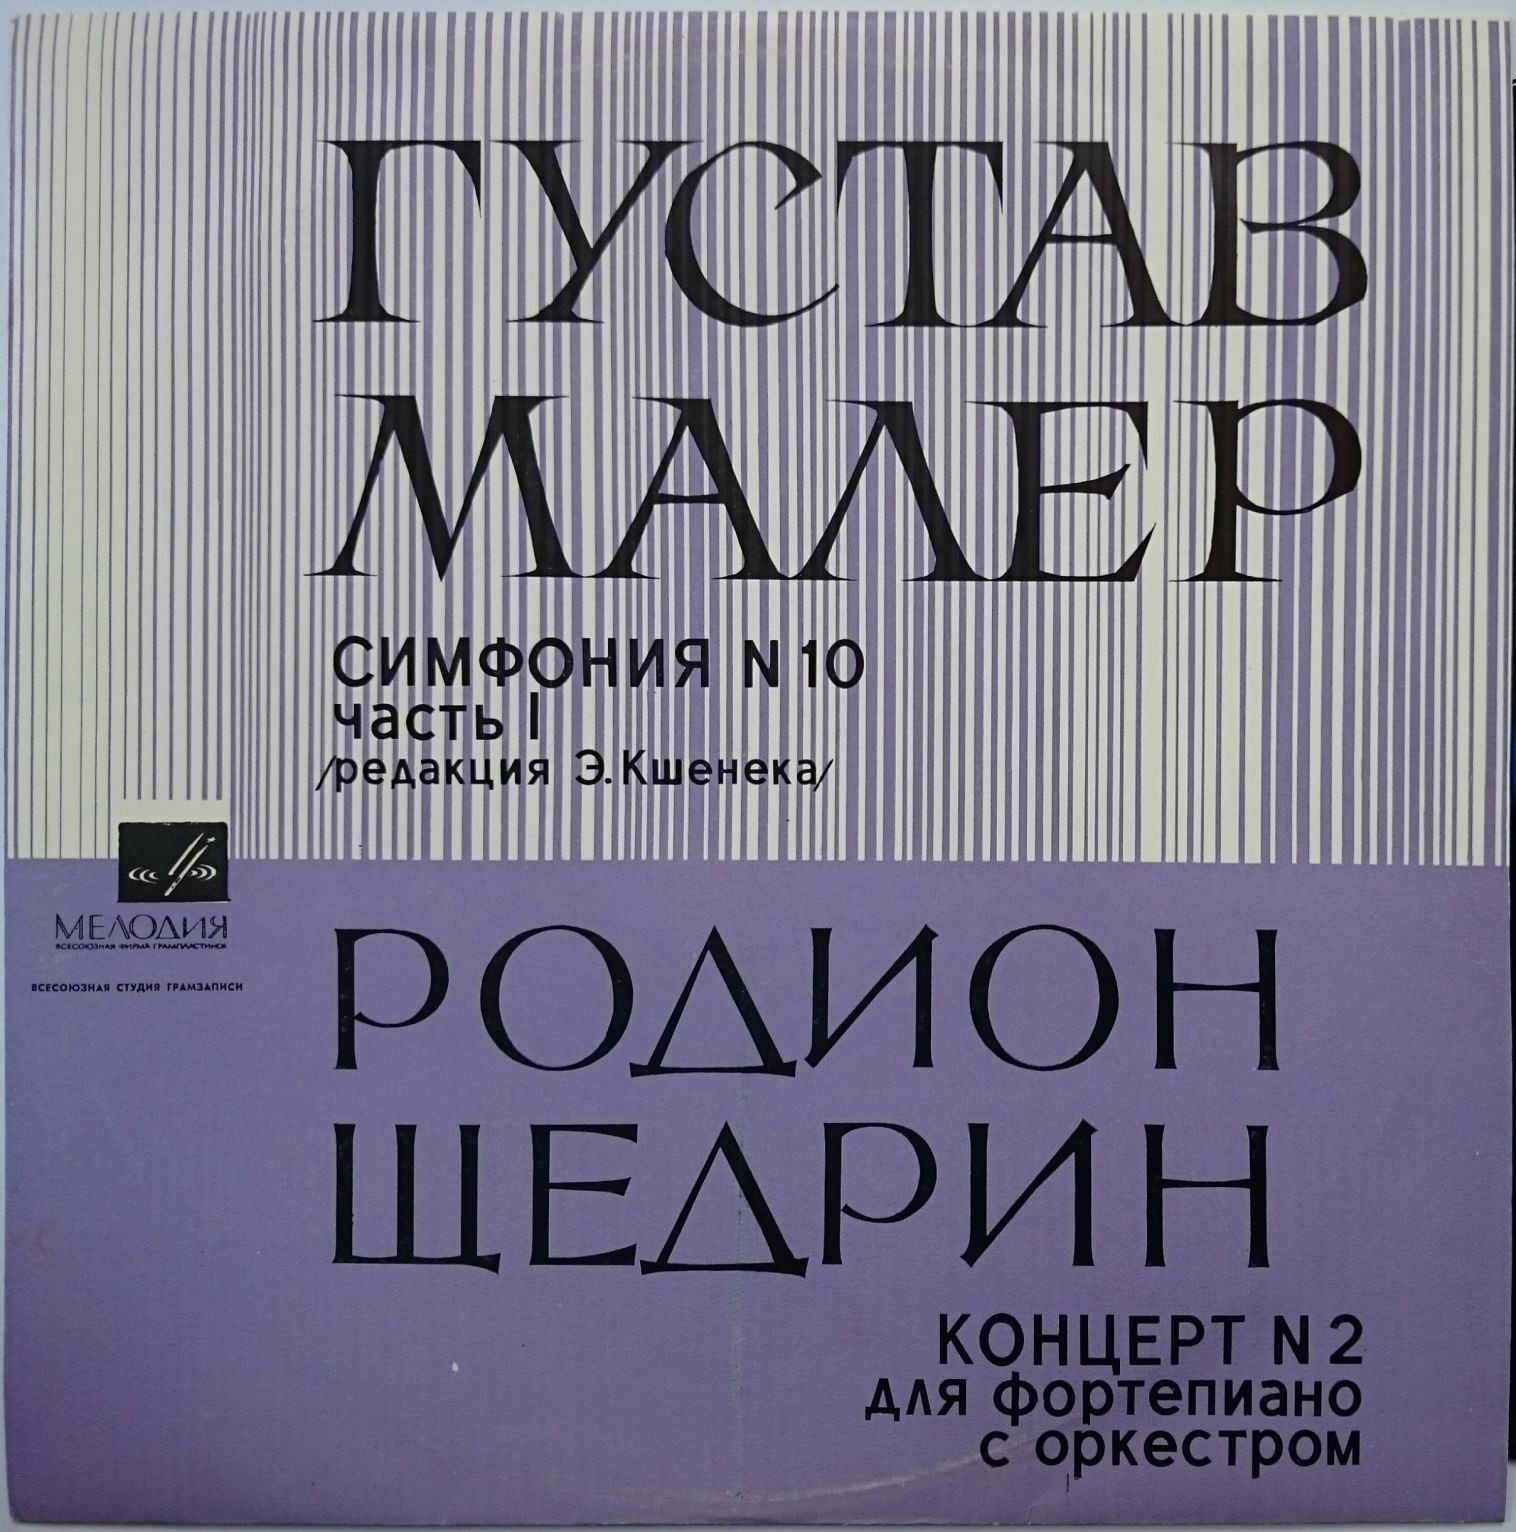 Г. МАЛЕР Симфония № 10; Р. ЩЕДРИН Концерт № 2 для ф-но с оркестром